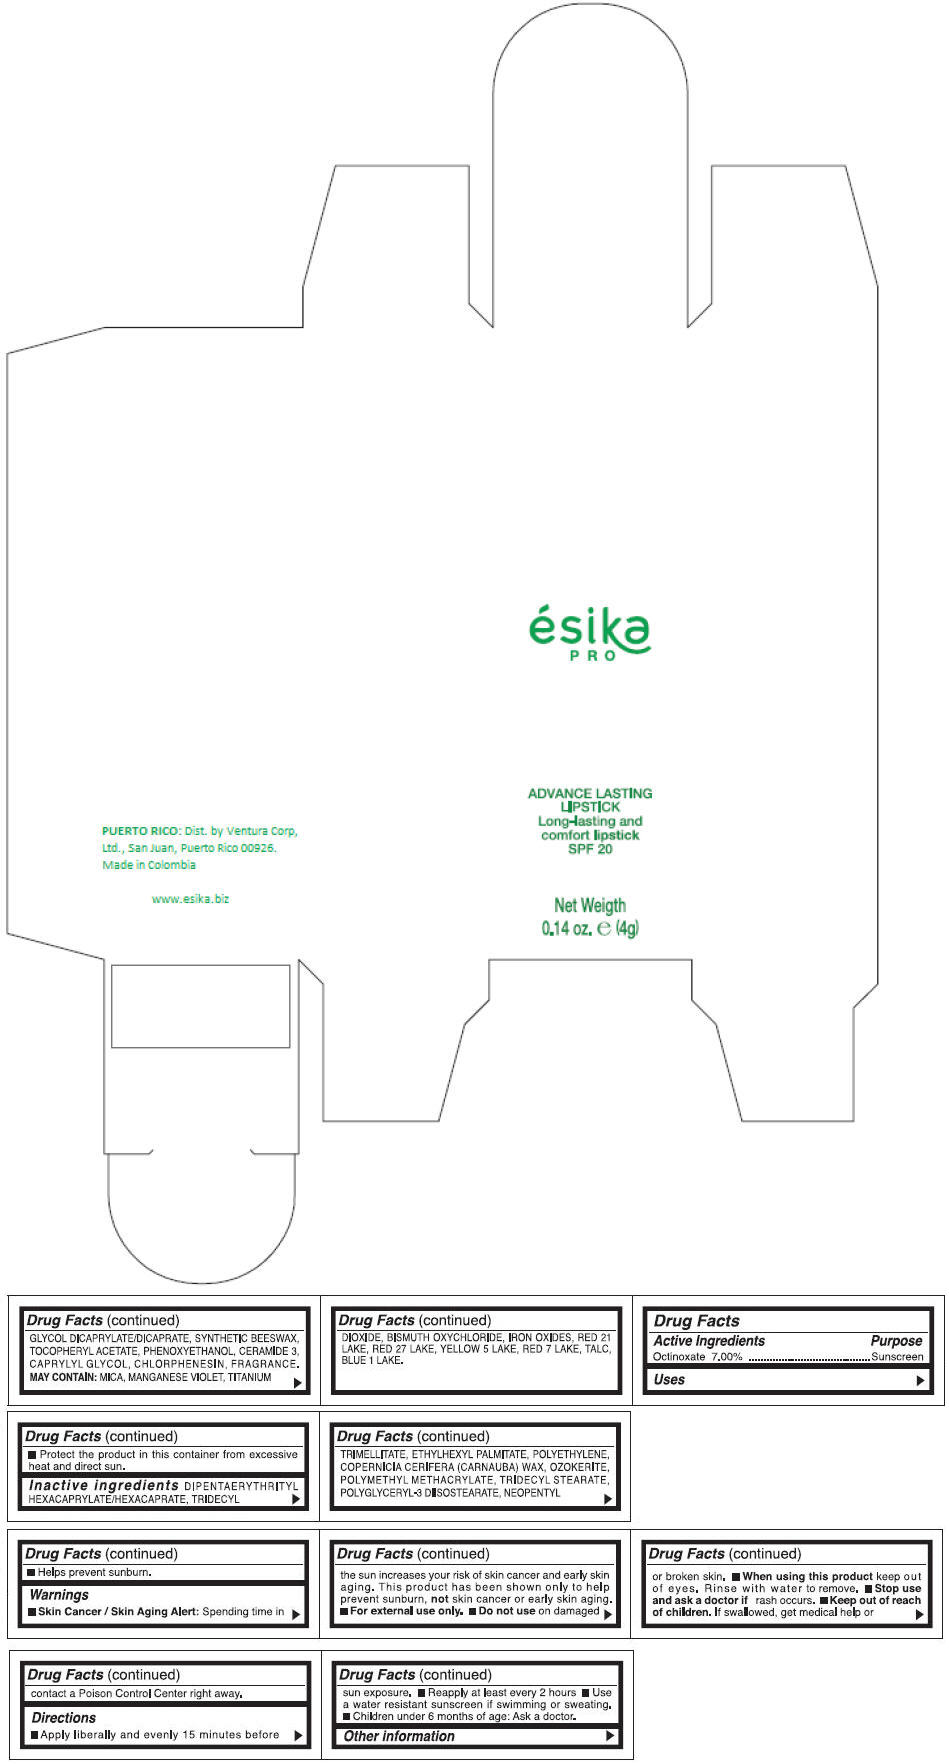 PRINCIPAL DISPLAY PANEL - 4 g Tube Box - (NARANJA OBSESION) - ORANGE